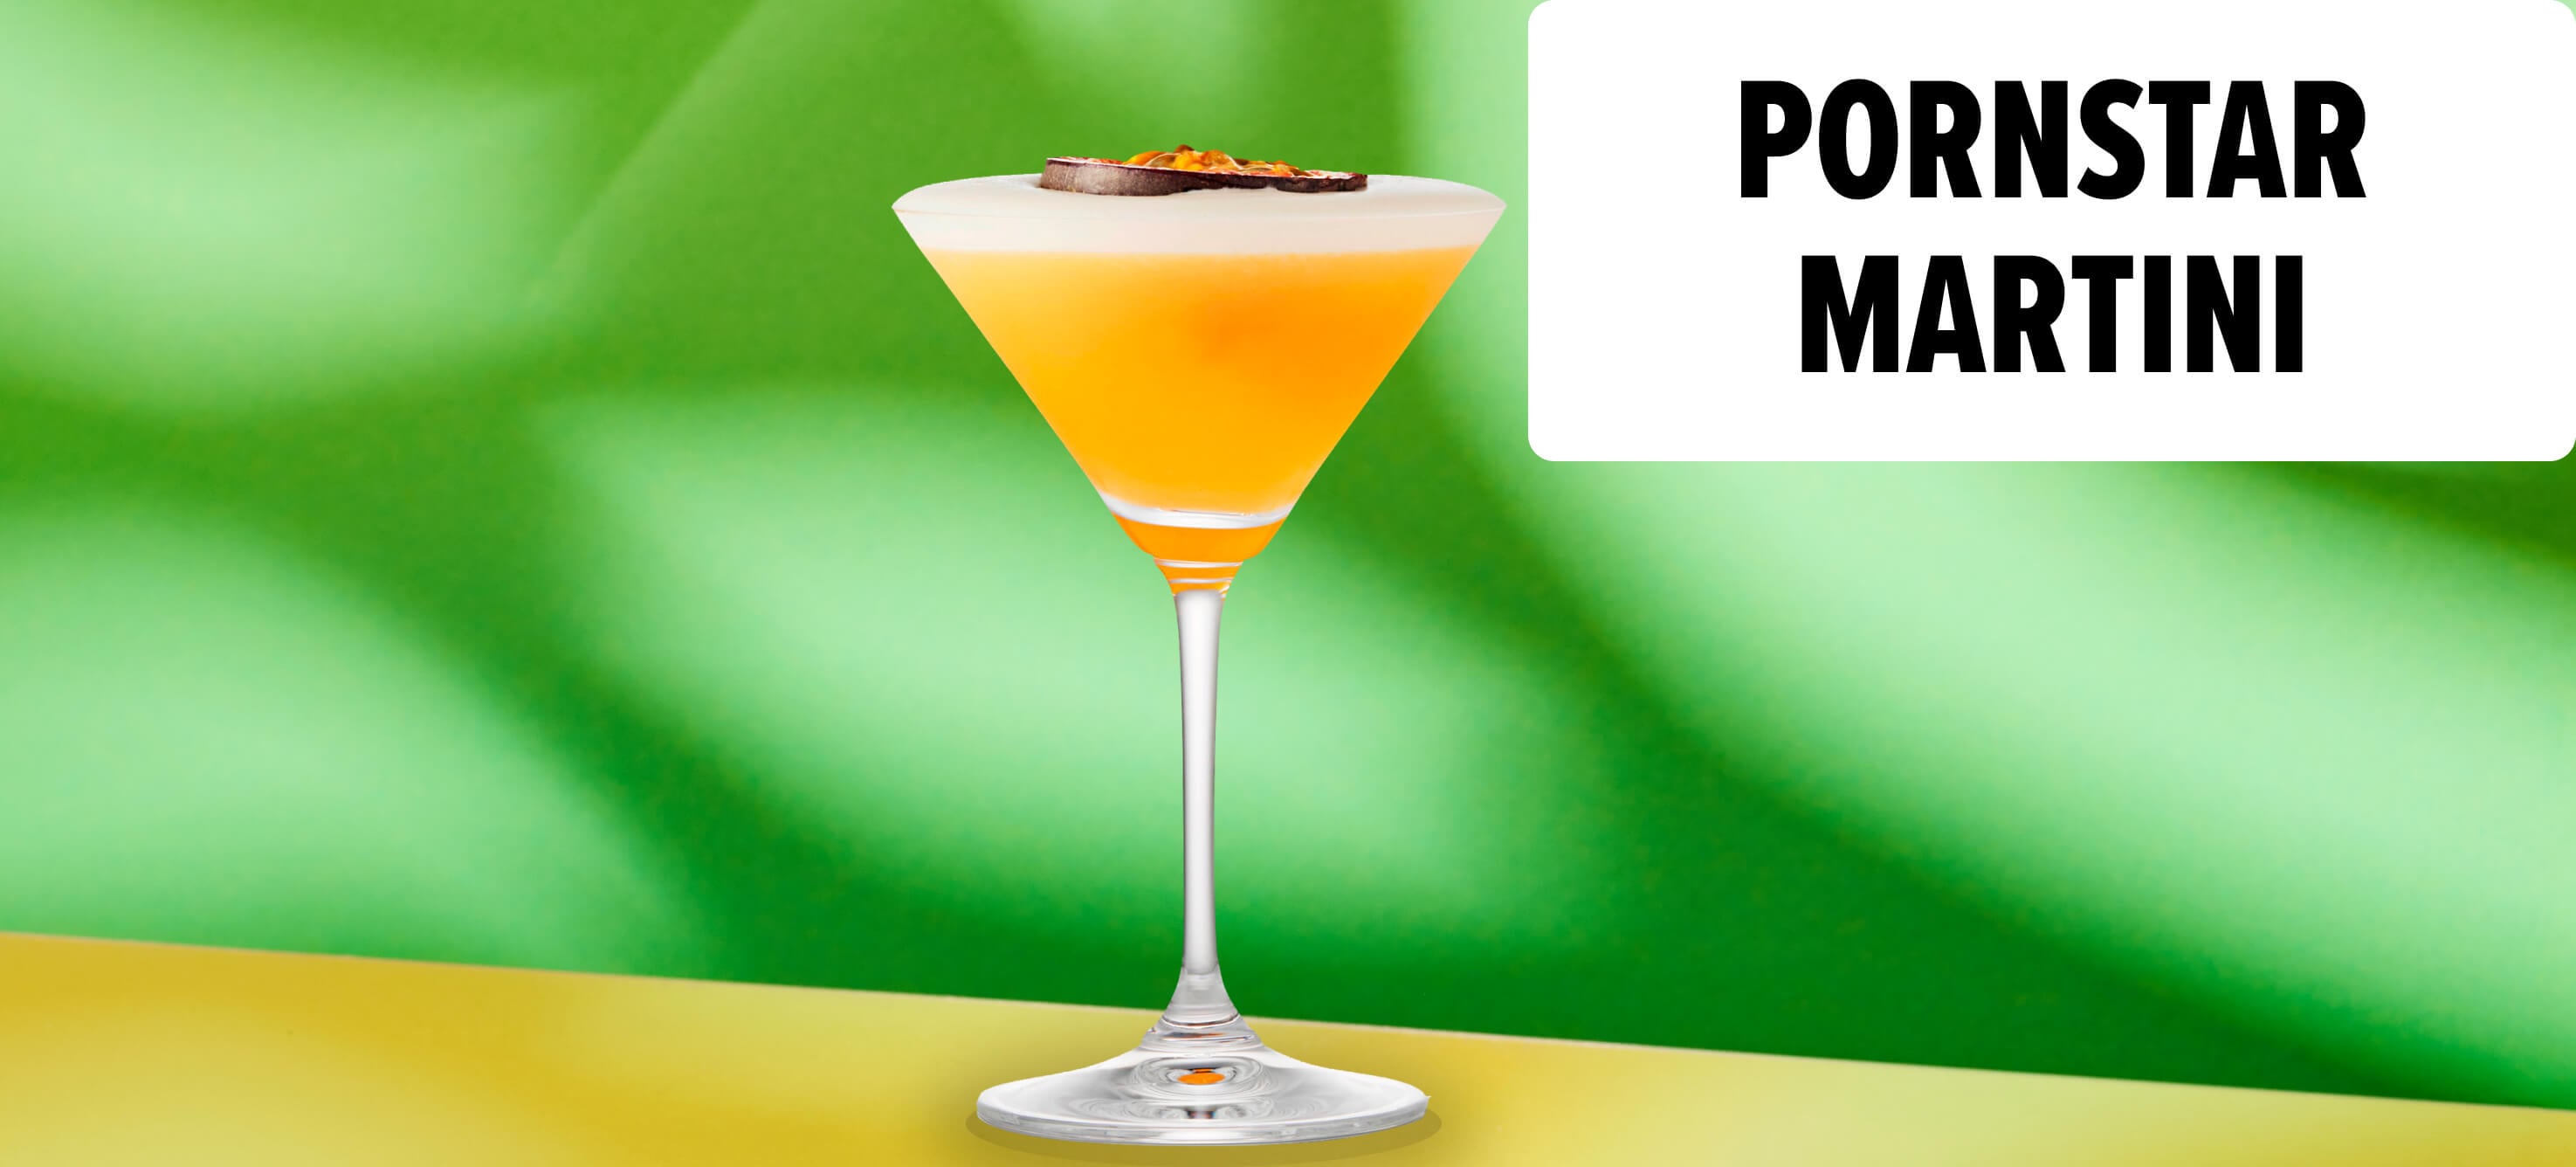 ontdek/cocktails/pornstar-martini-landing